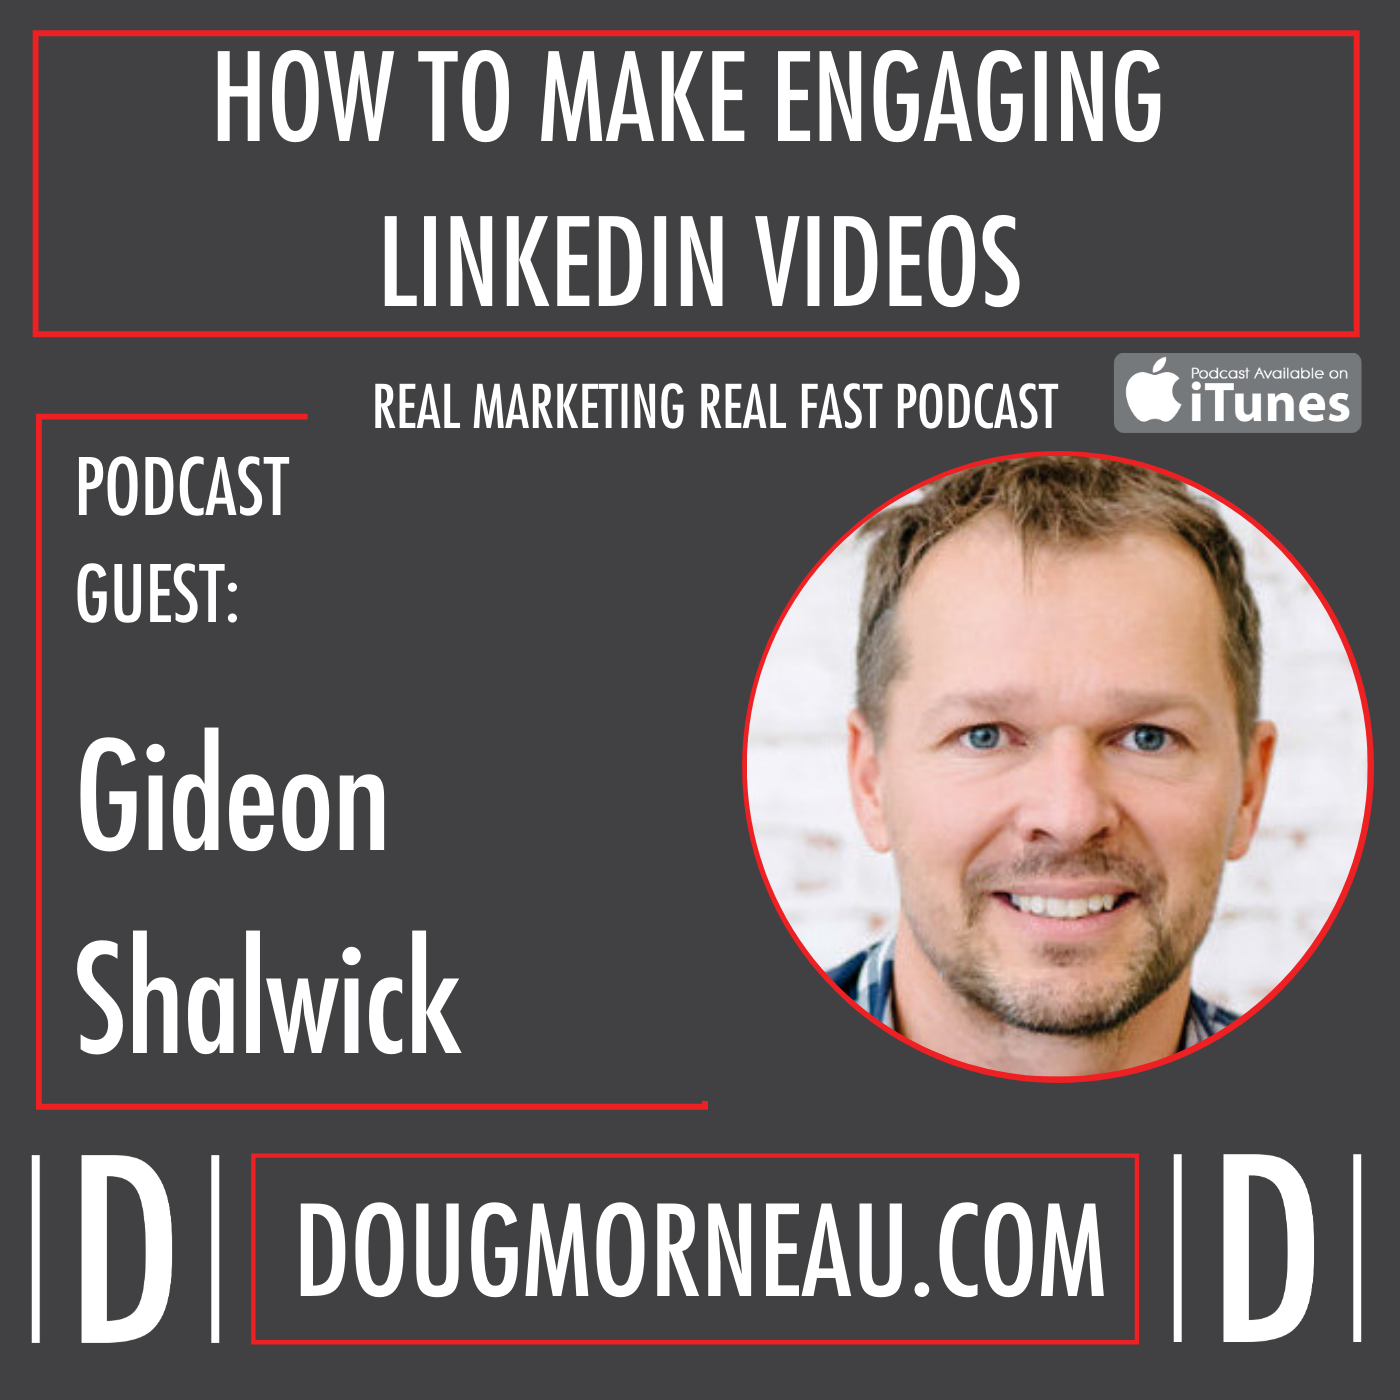 HOW TO MAKE ENGAGING LINKEDIN VIDEOS - GIDEON SHALWICK - DOUG MORNEAU - REAL MARKETING REAL FAST PODCAST